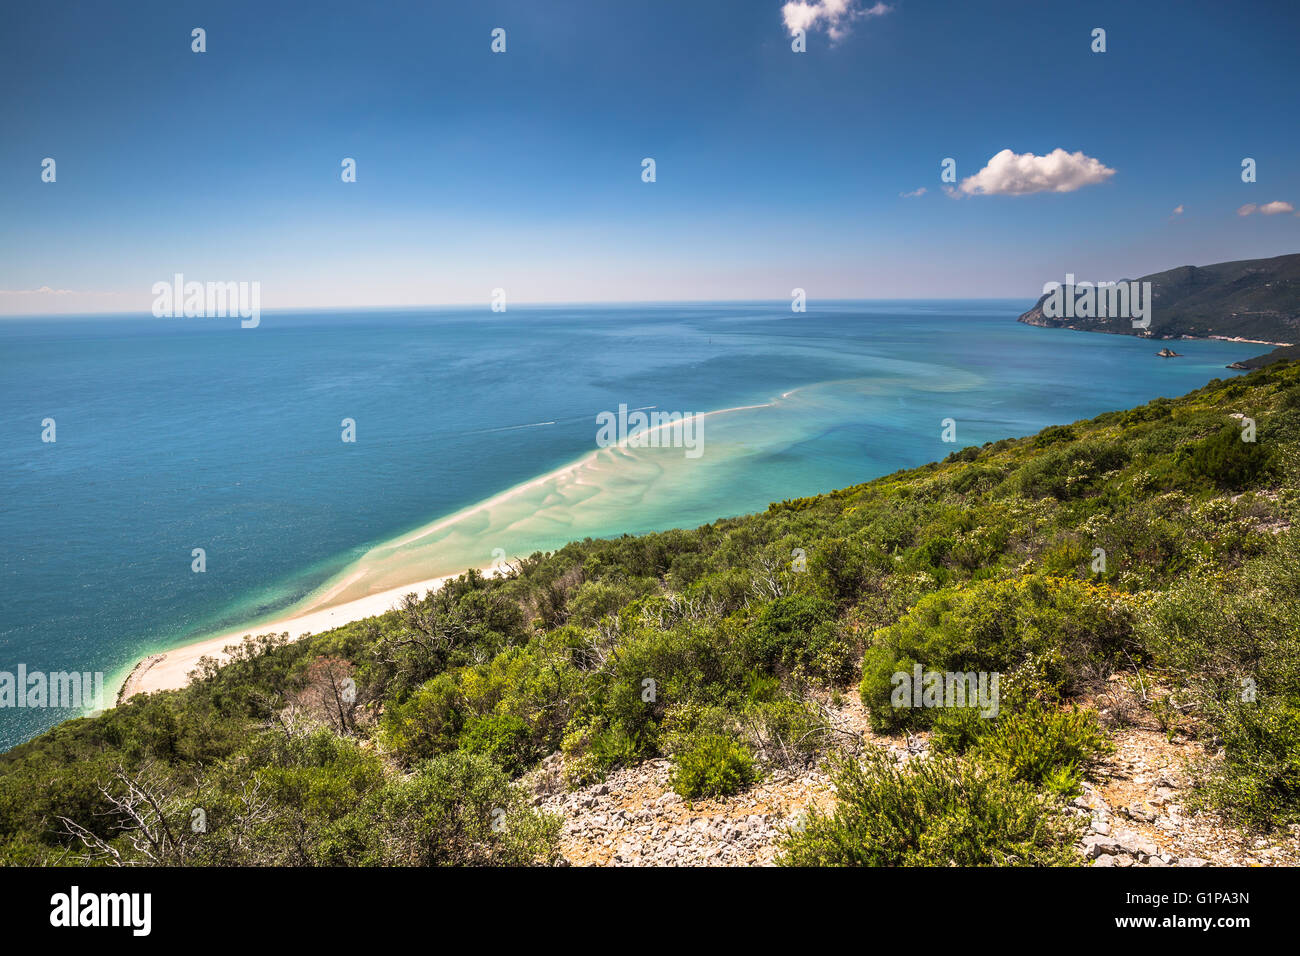 Beautiful landscape view of the National Park Arrabida in Setubal,Portugal. Stock Photo